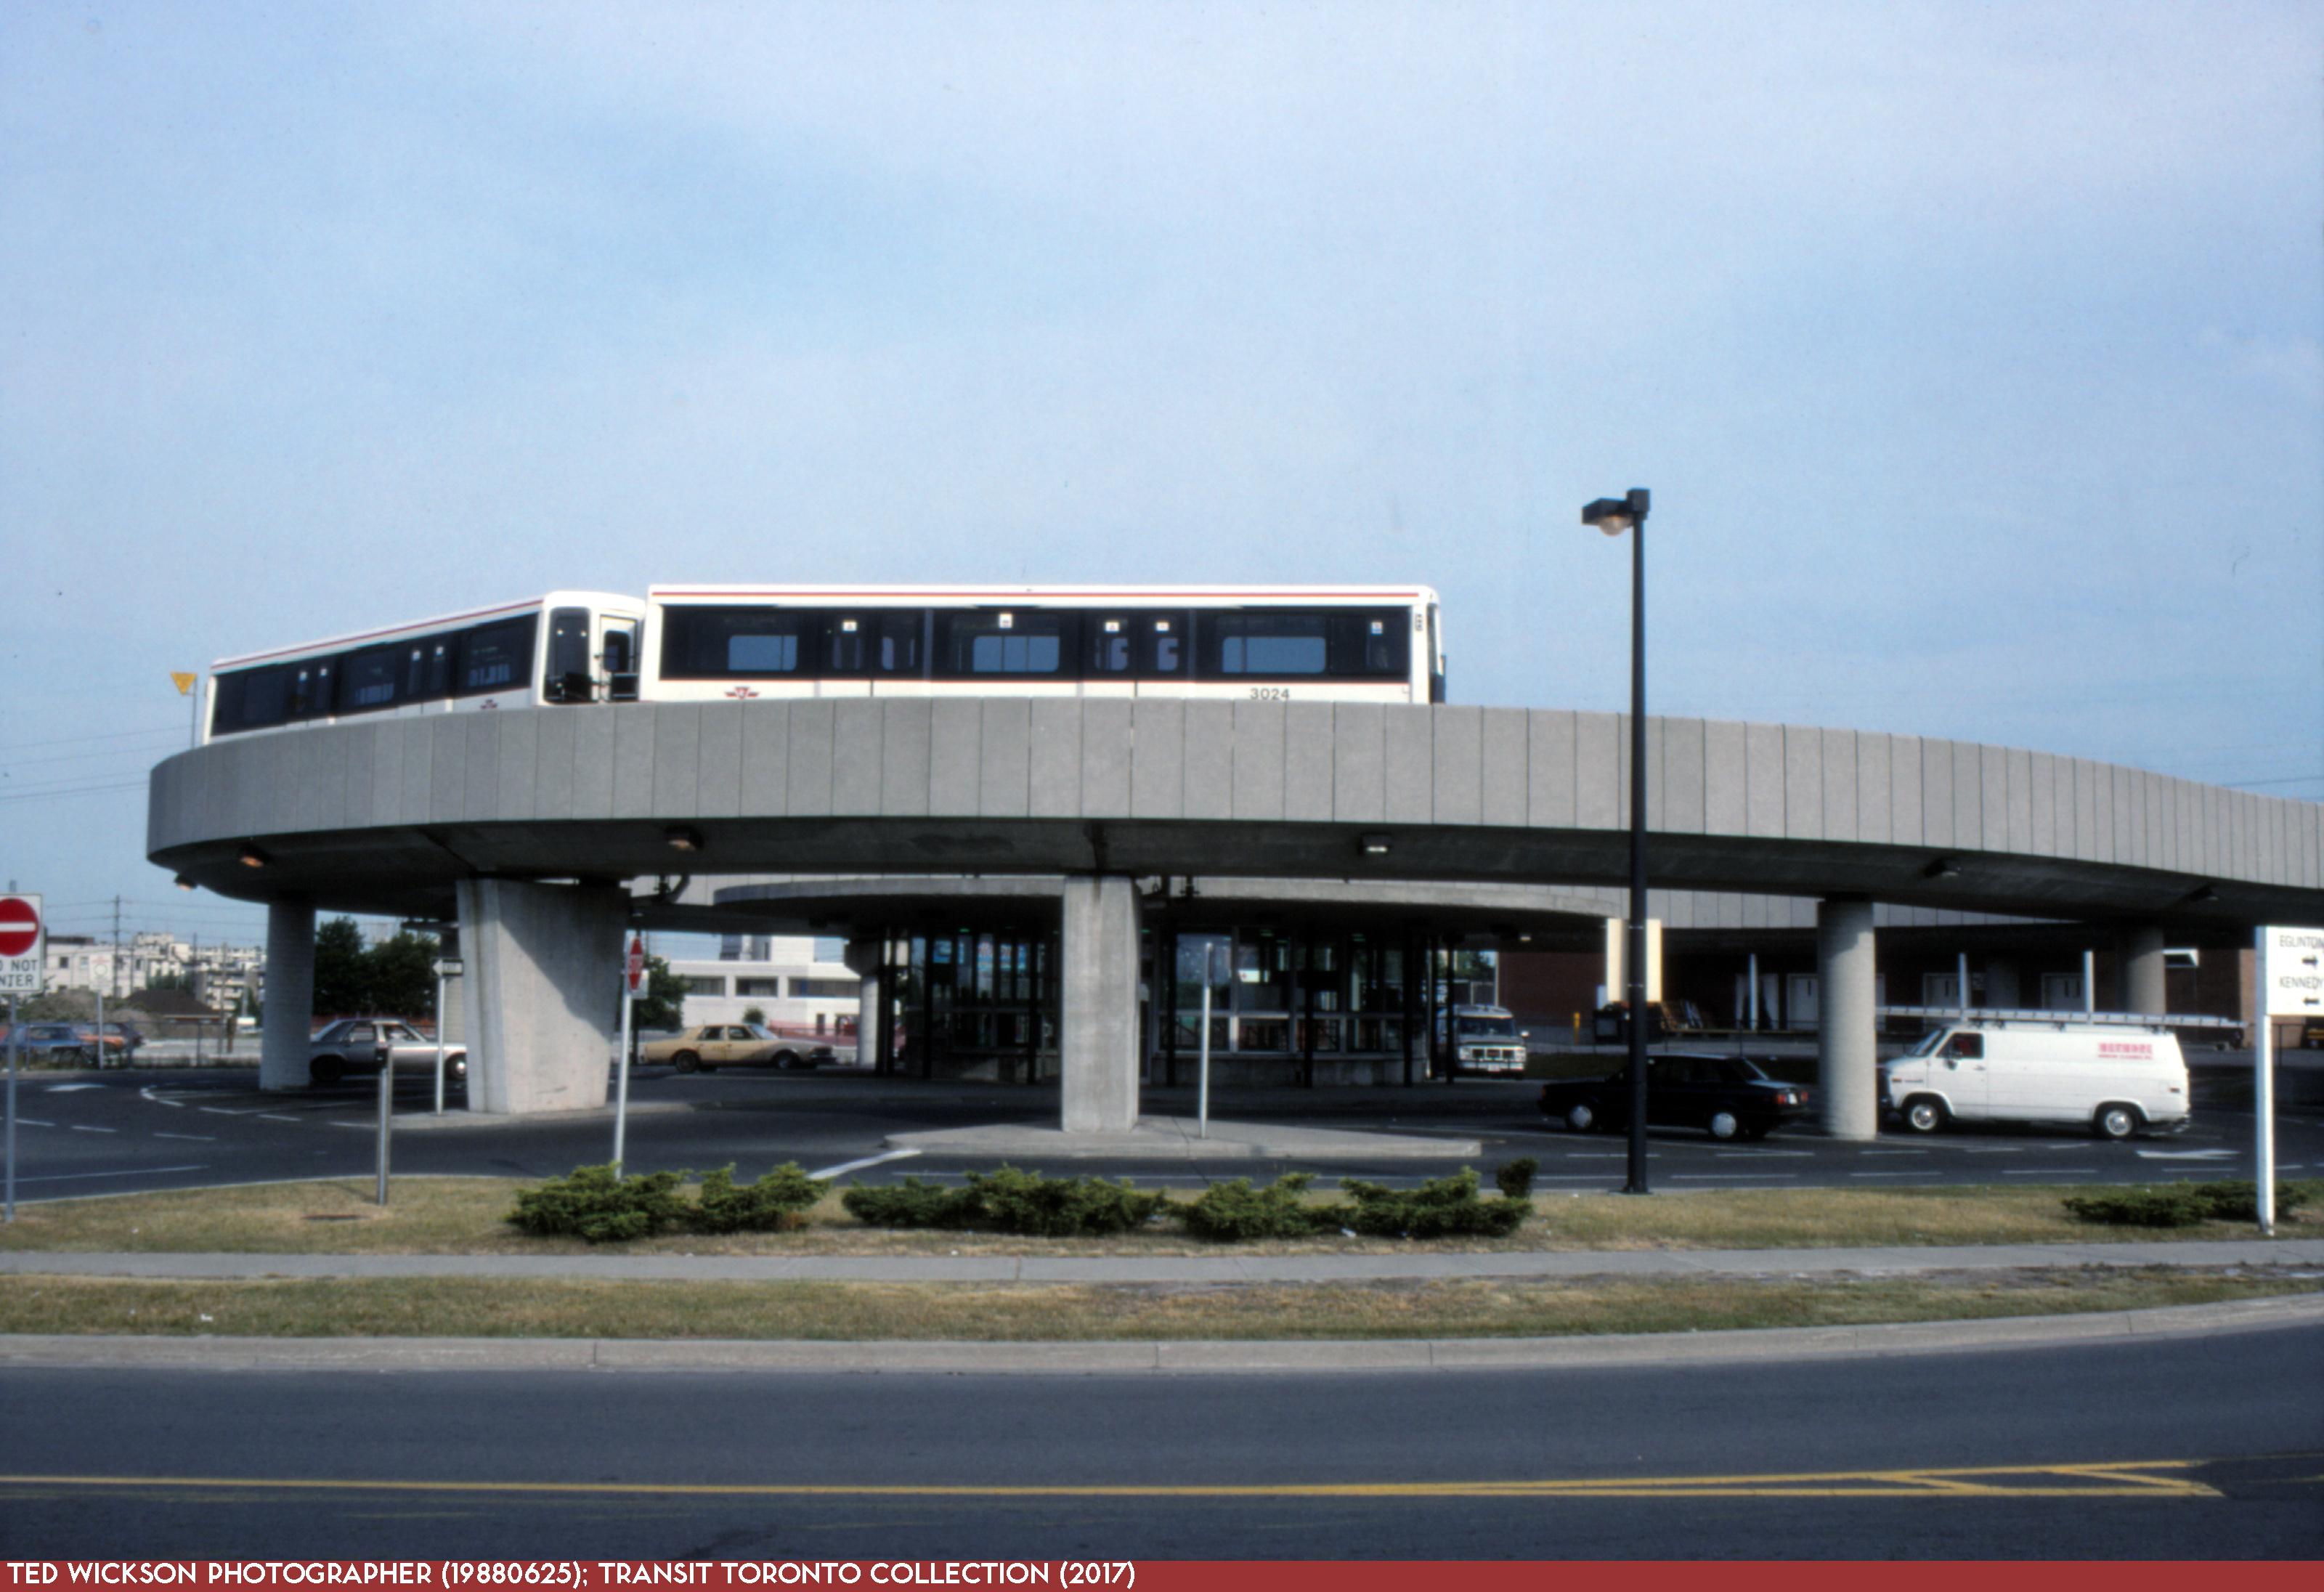 Kennedy Station 19880625